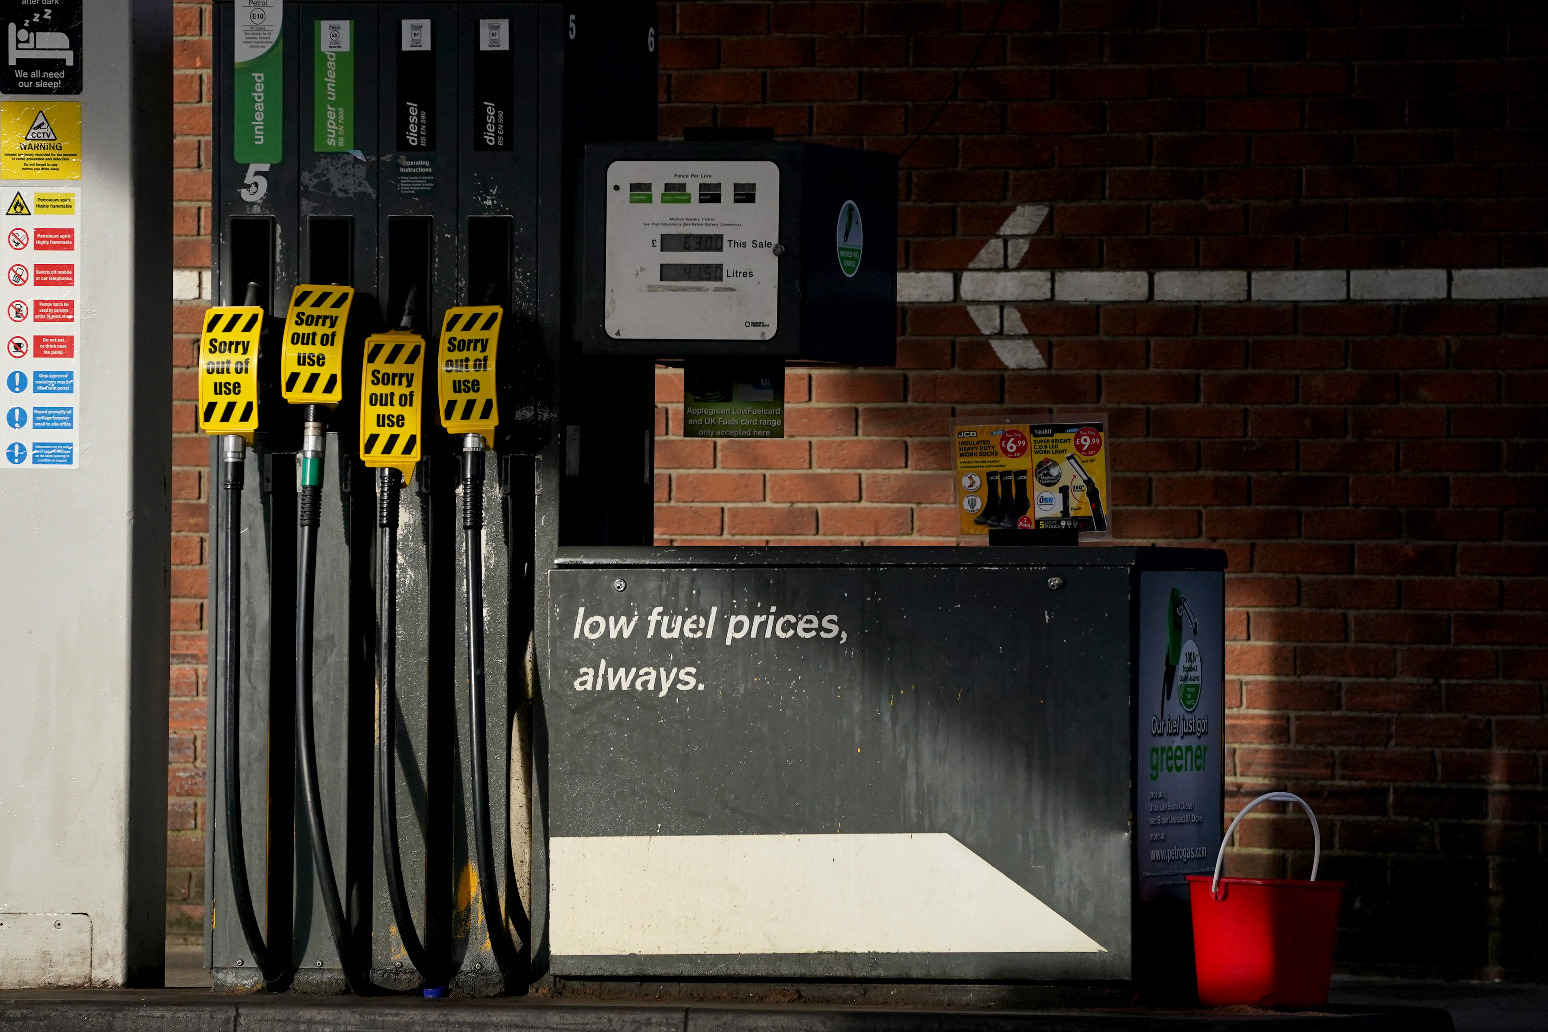 Average petrol prices hit record £1.51 per litre 